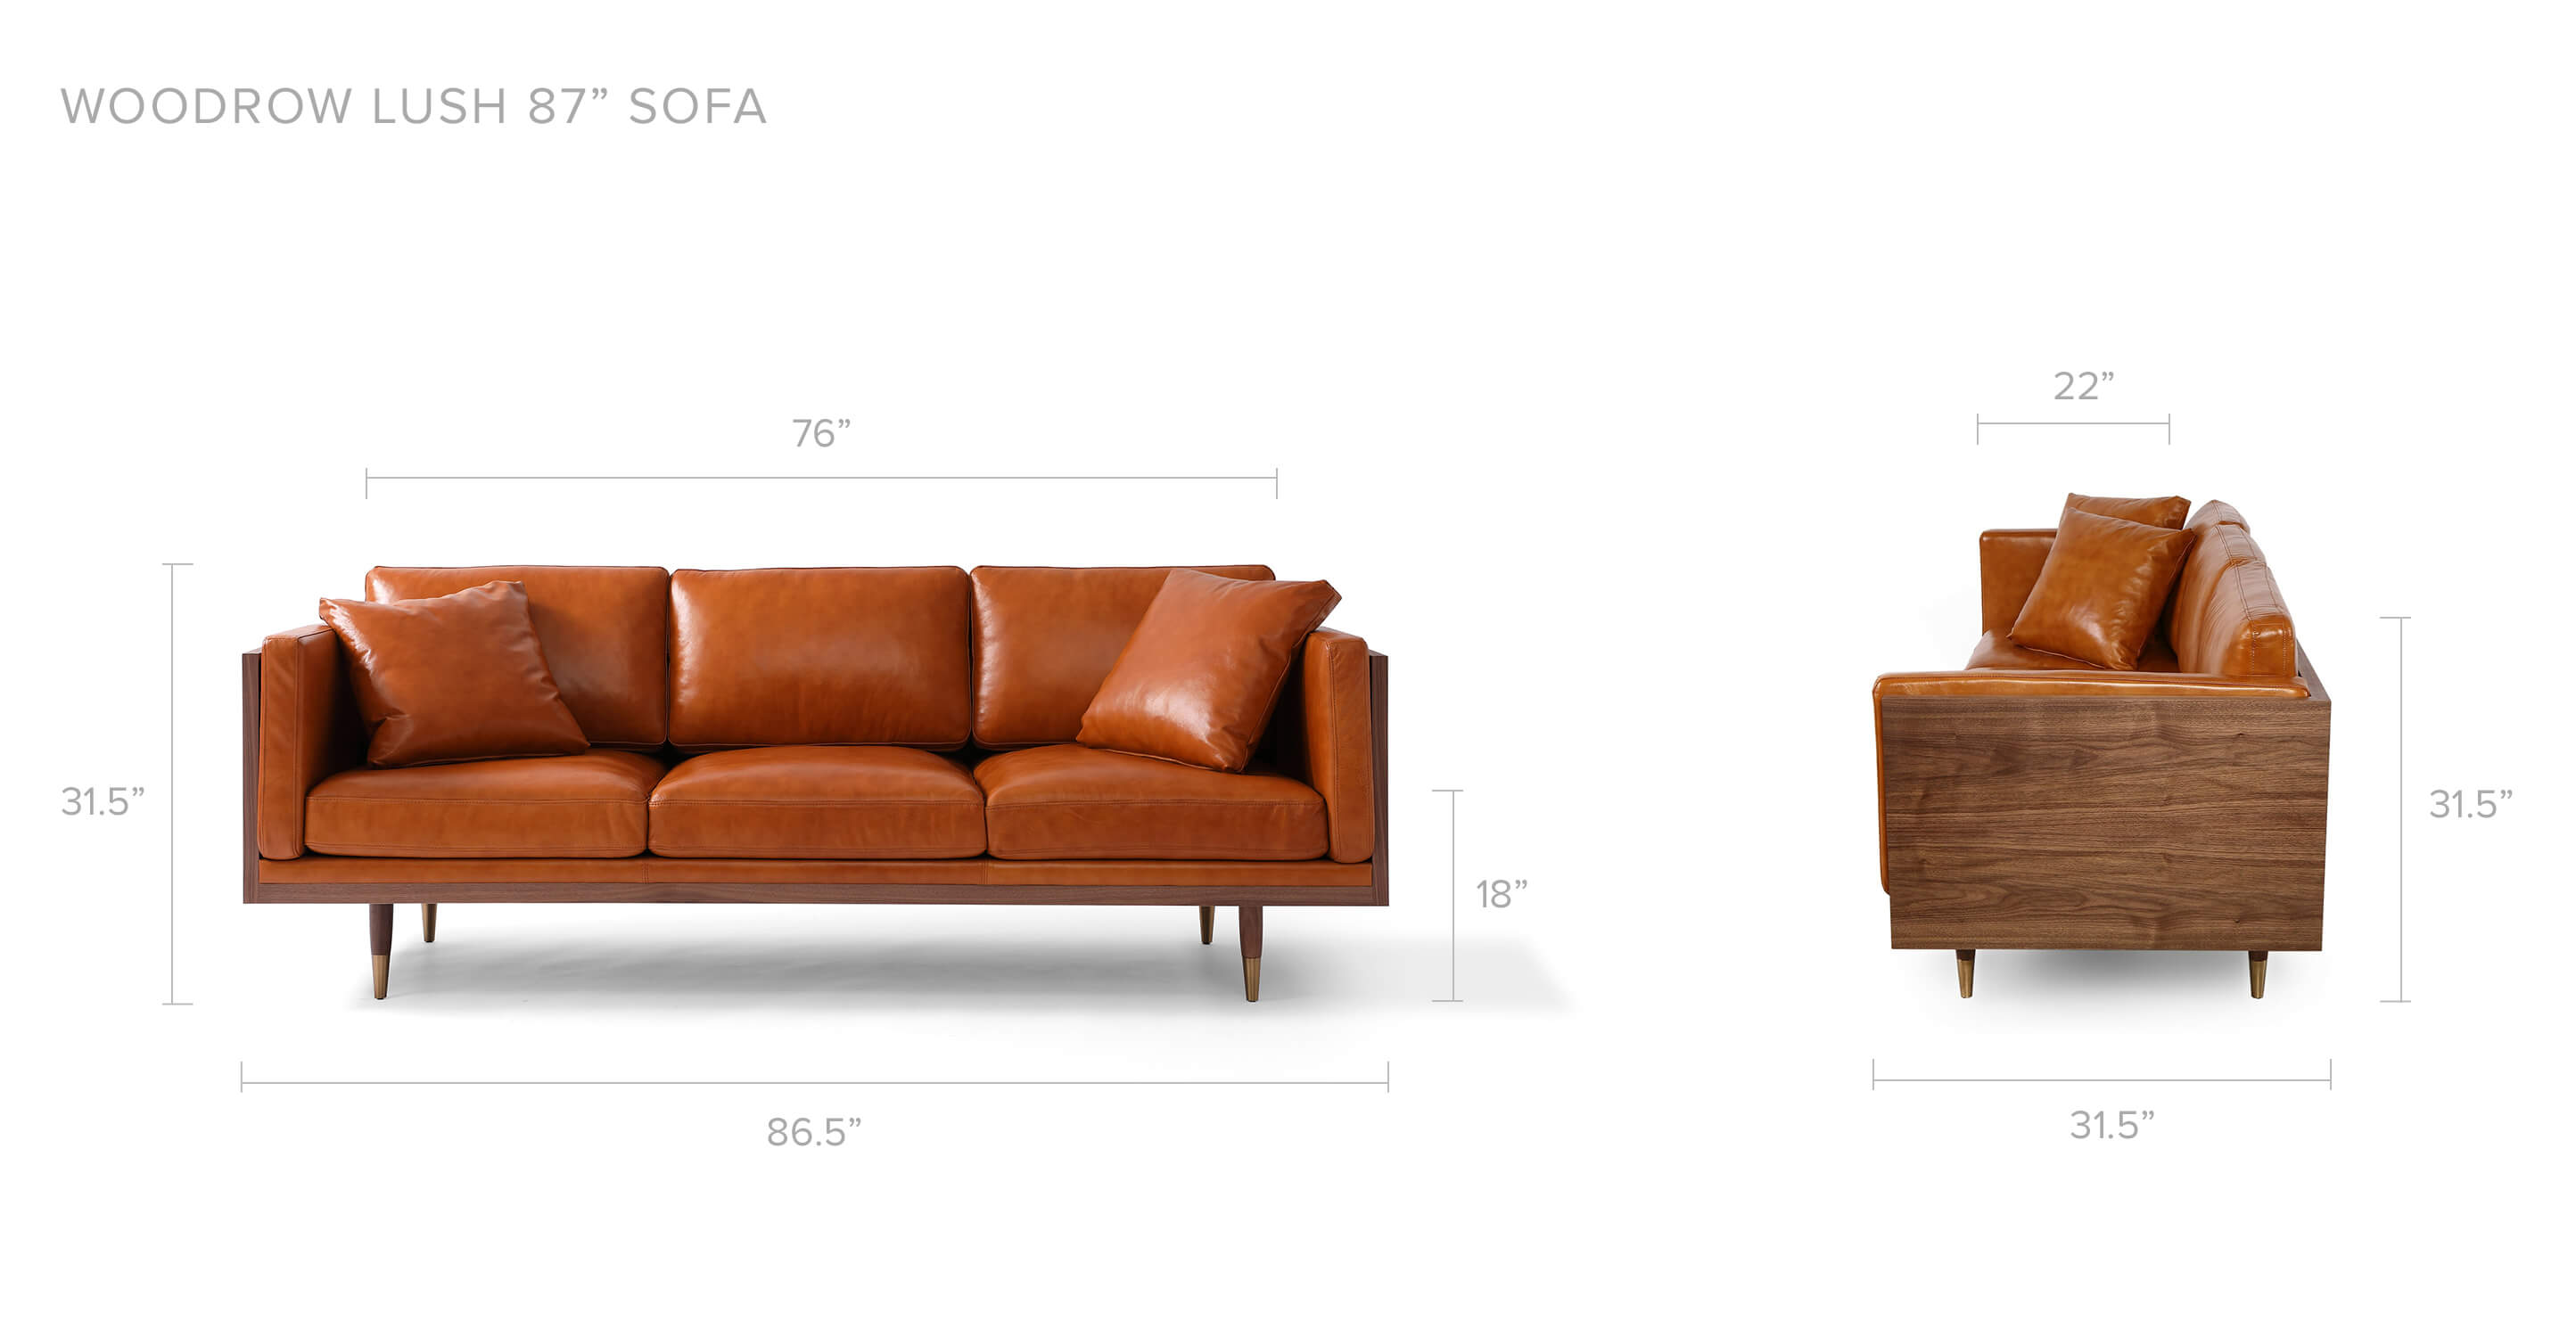 Woodrow Lush 87" Leather Sofa Walnut Tan Aniline